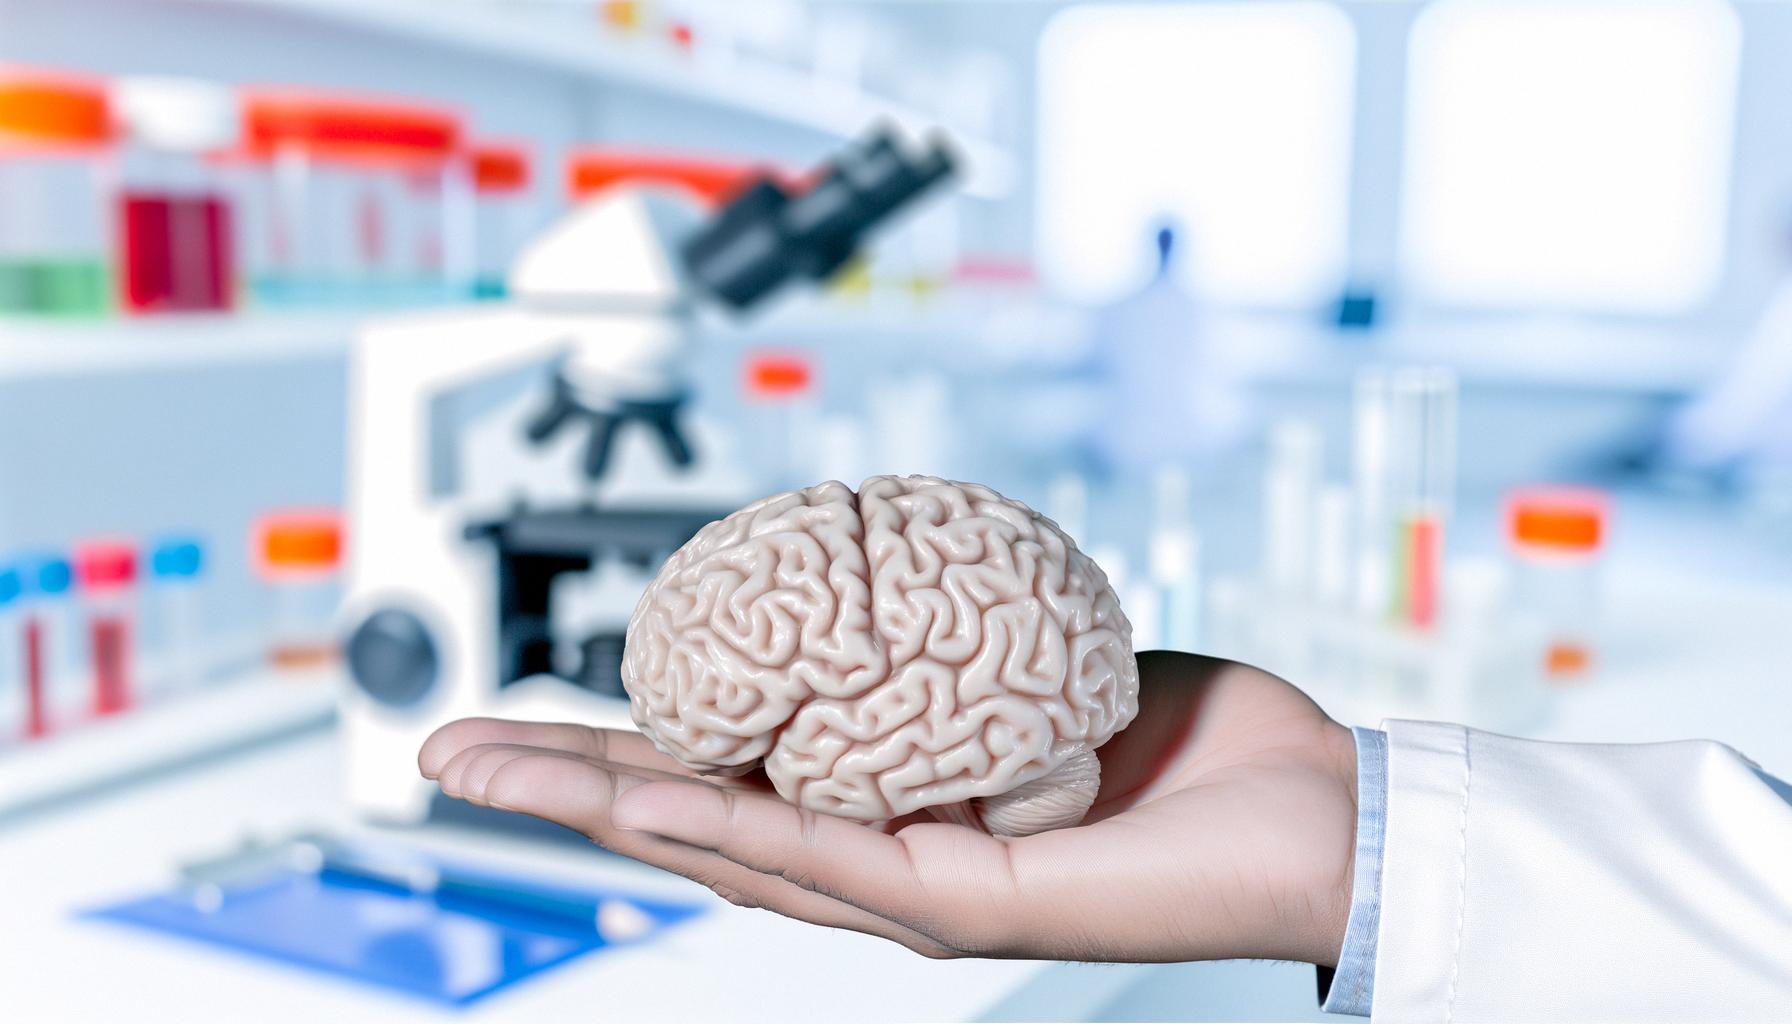 Mini human brain model grown Balanced News